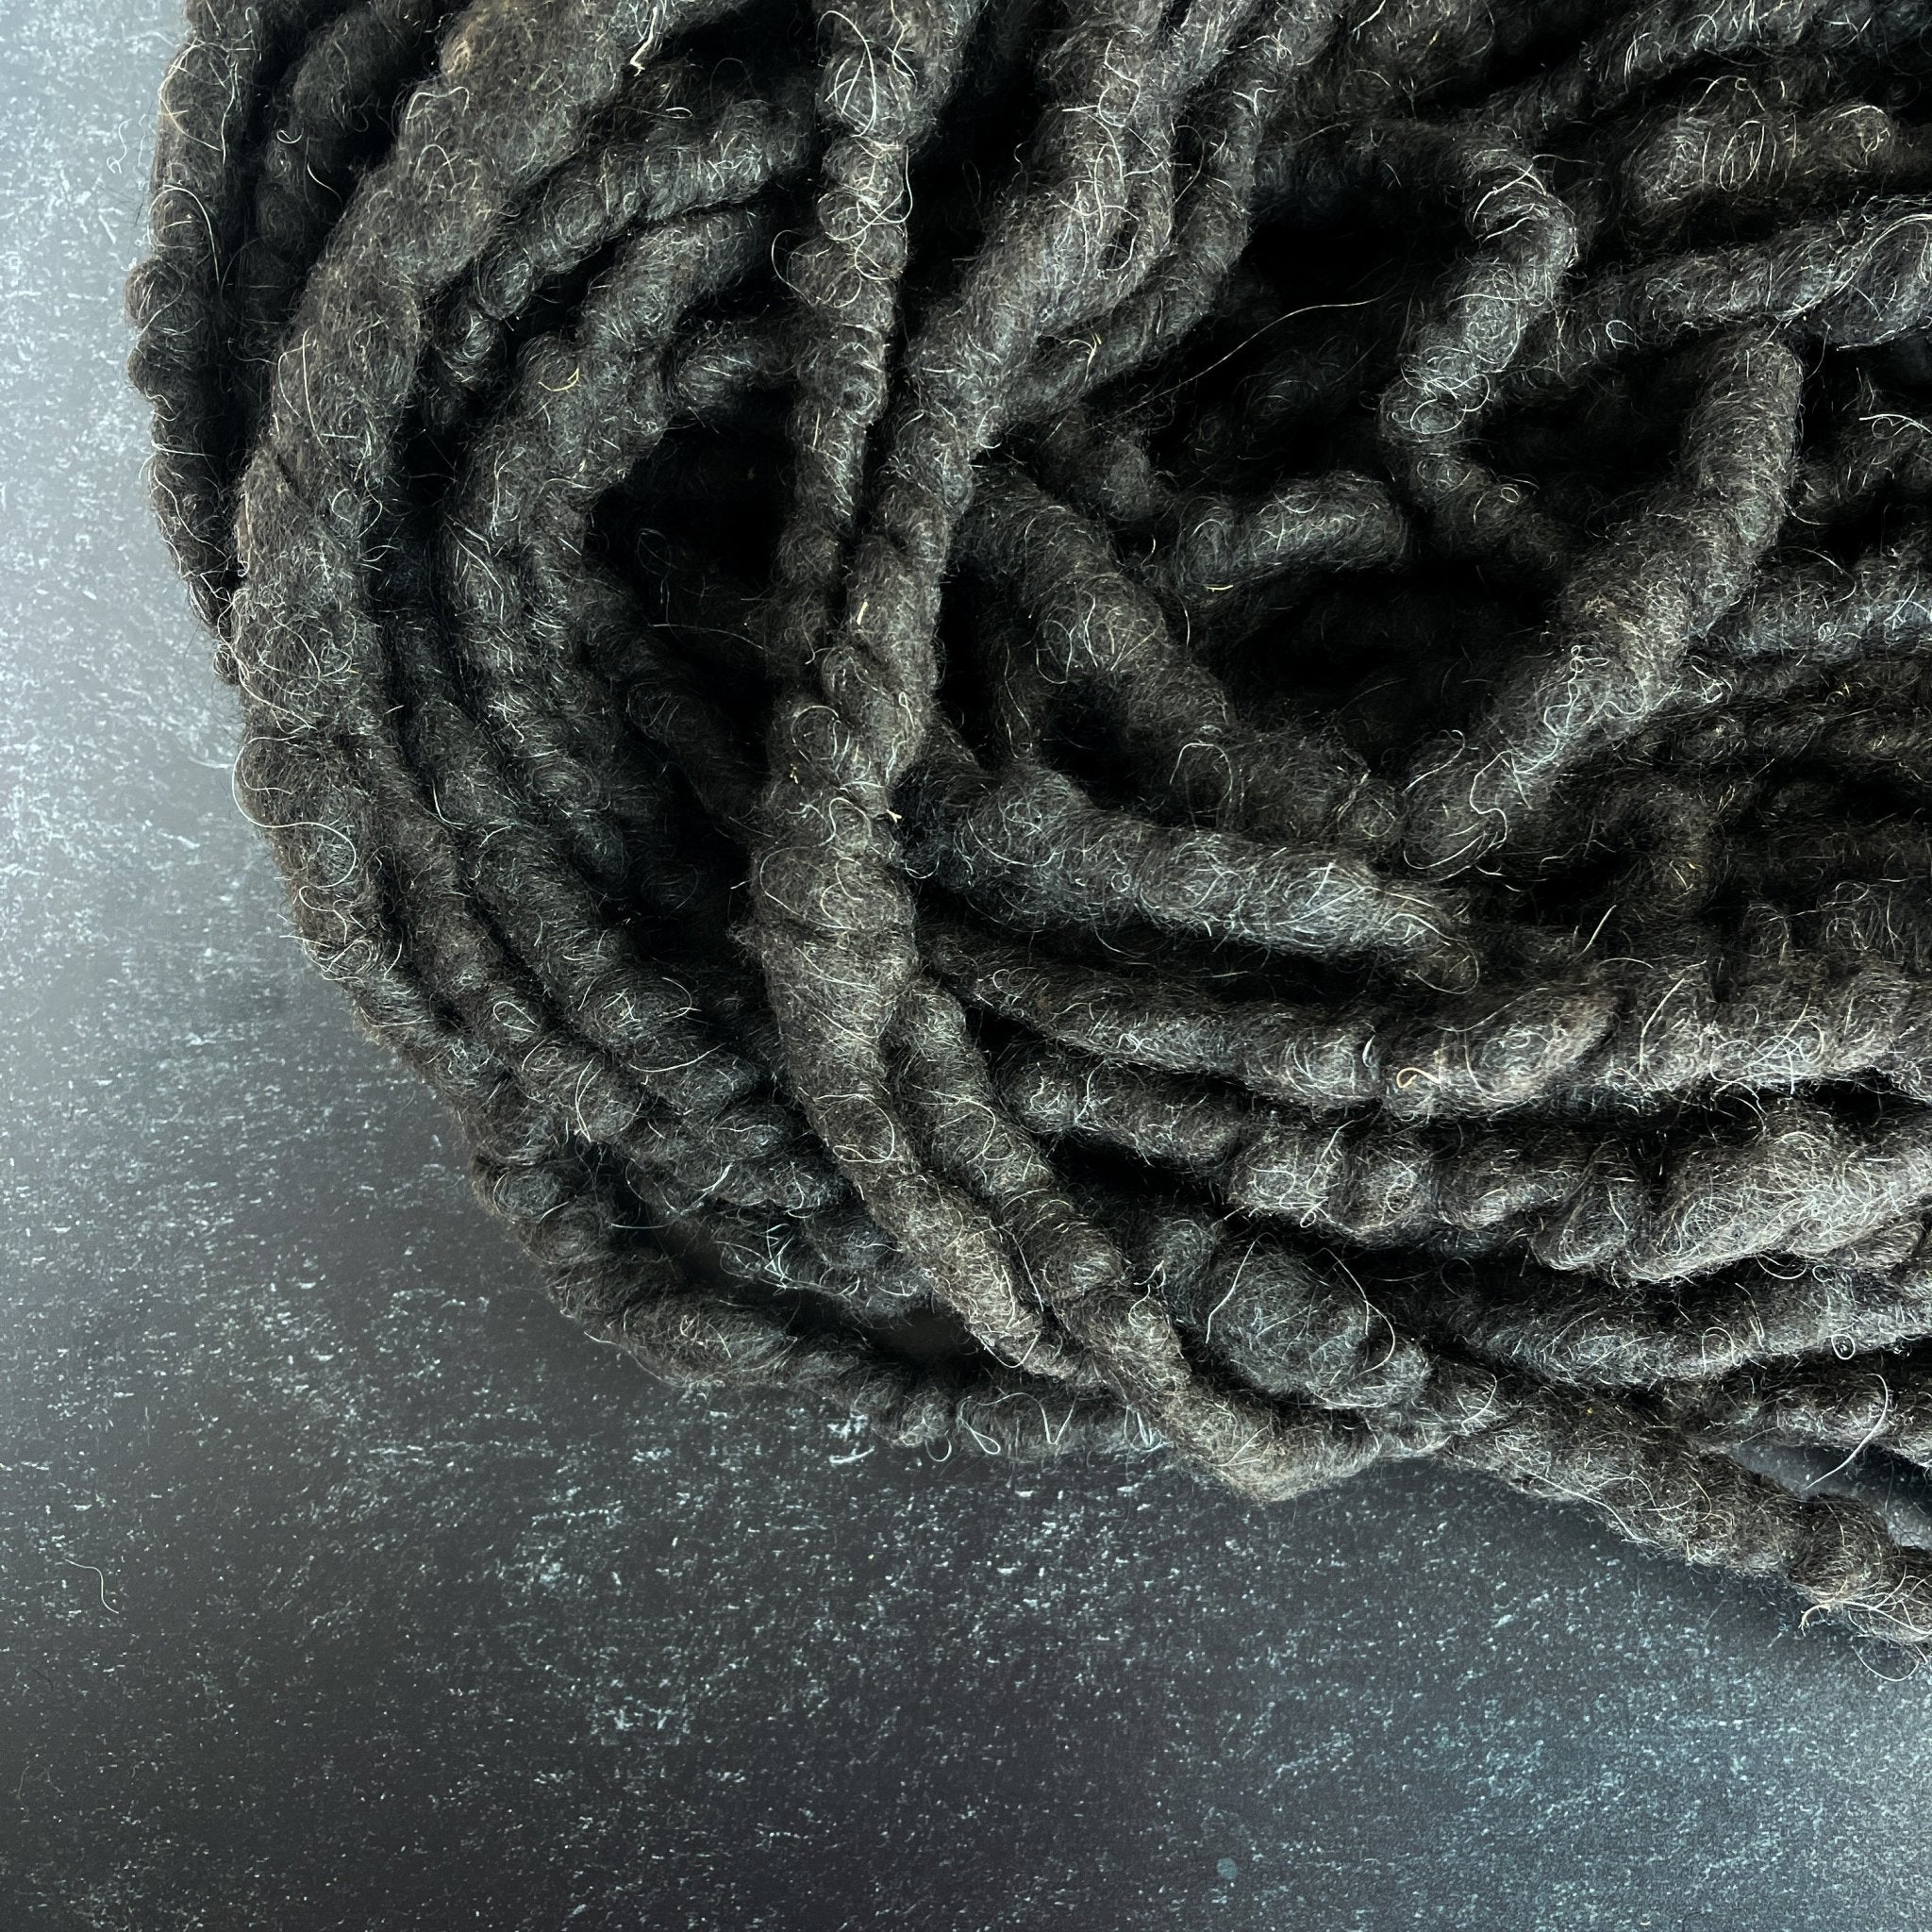 Chunky Yarn Core Spun Wool Yarn - Natural Black 100 feet - Icelandic Wool  Extra Bulk Art Yarn